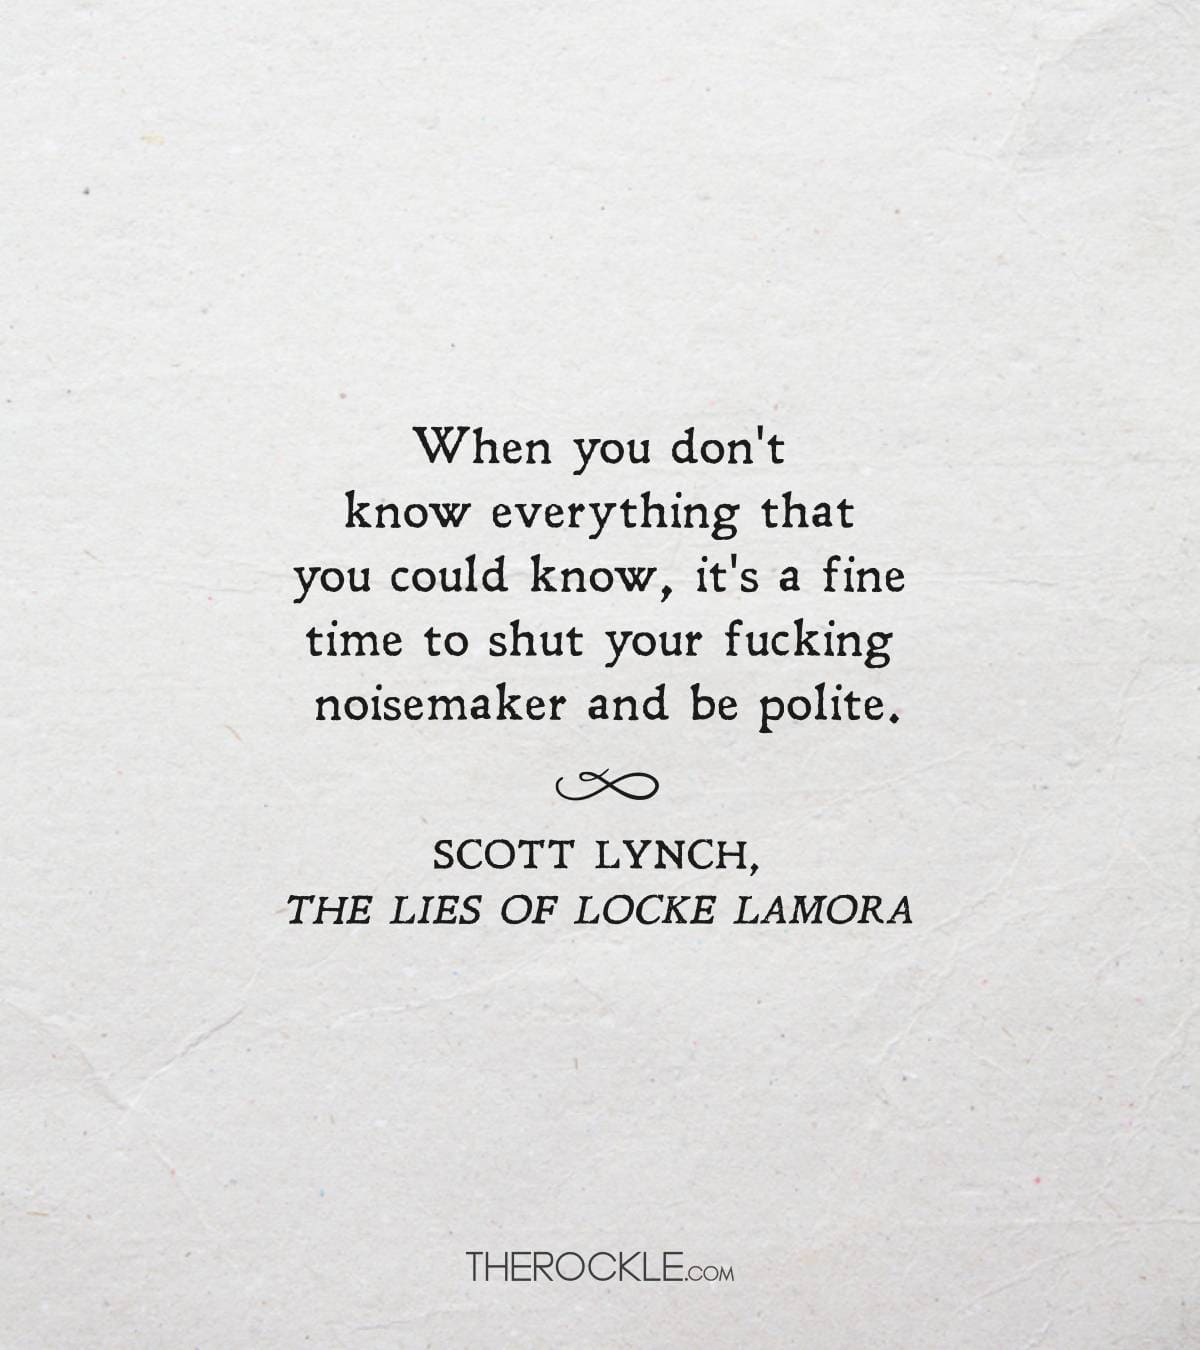 Quote from Scott Lynch's The Lies of Locke Lamora